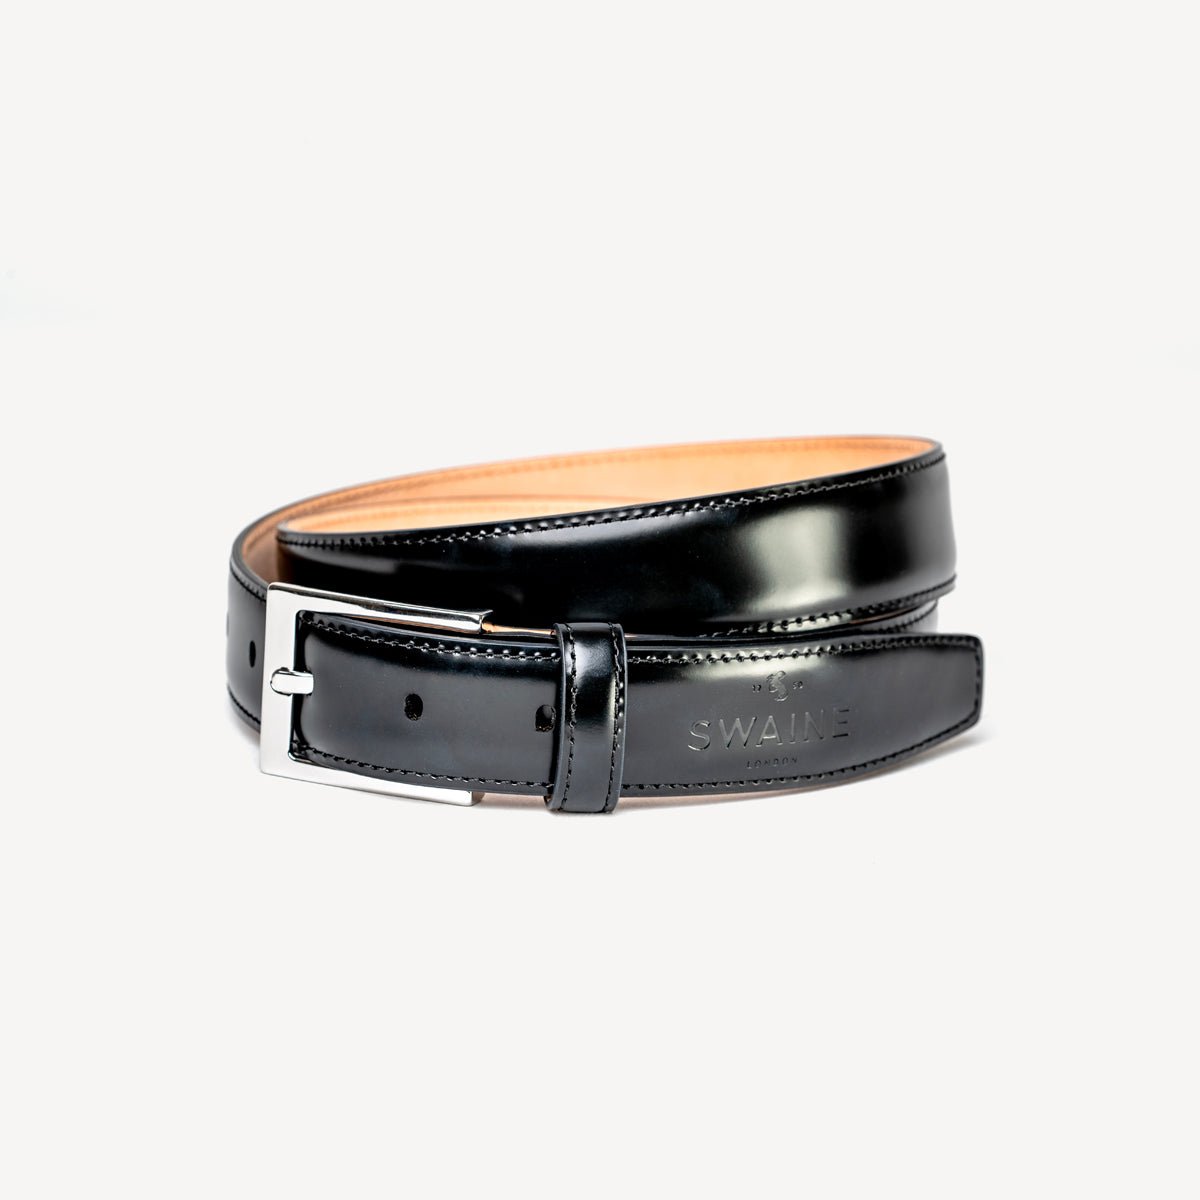 Men's Leather Belt - Black - Swaine